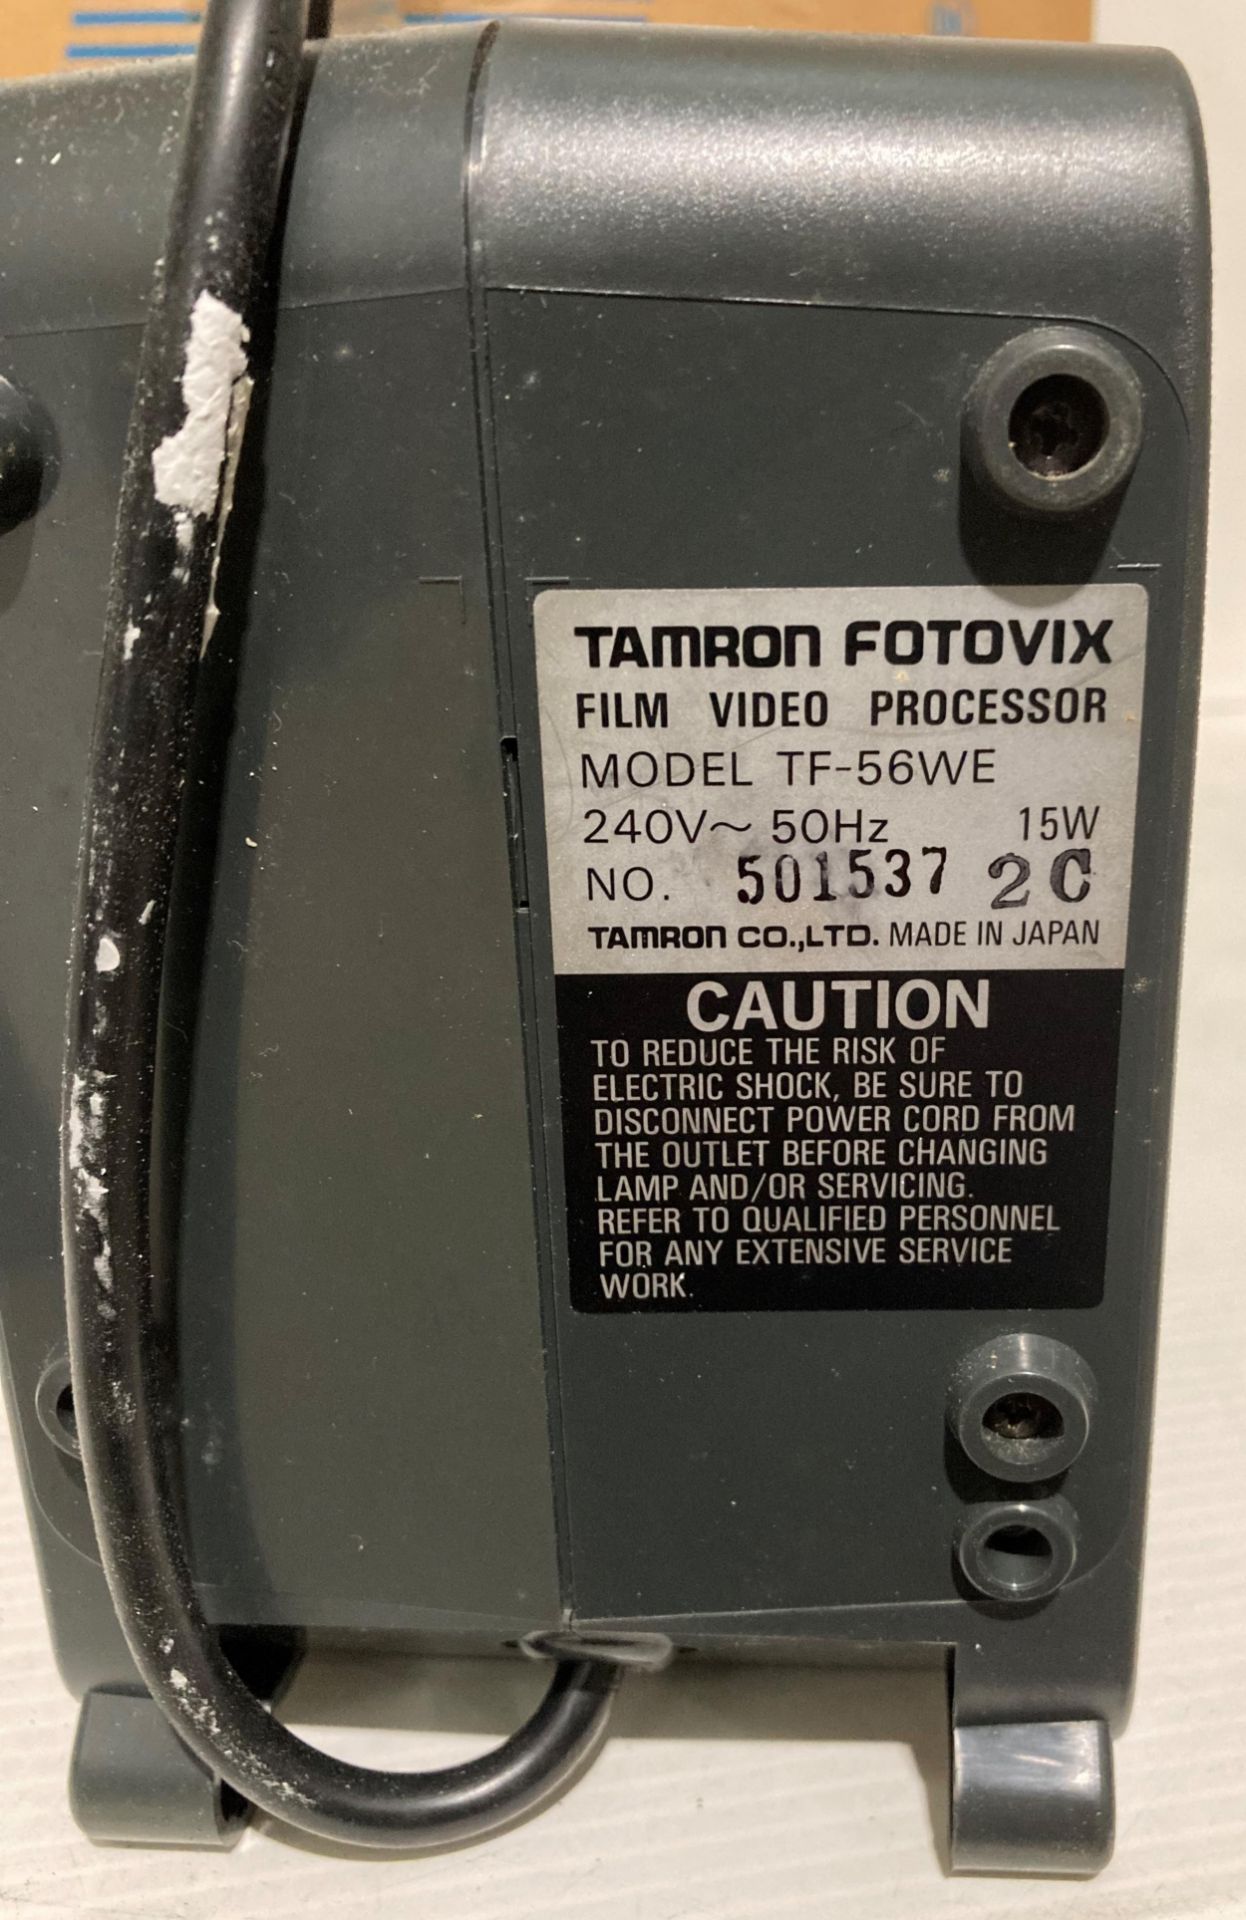 Tamron Fotovix III film video processor model: TF-56WE (Saleroom location: S2 QB05) - Image 3 of 4